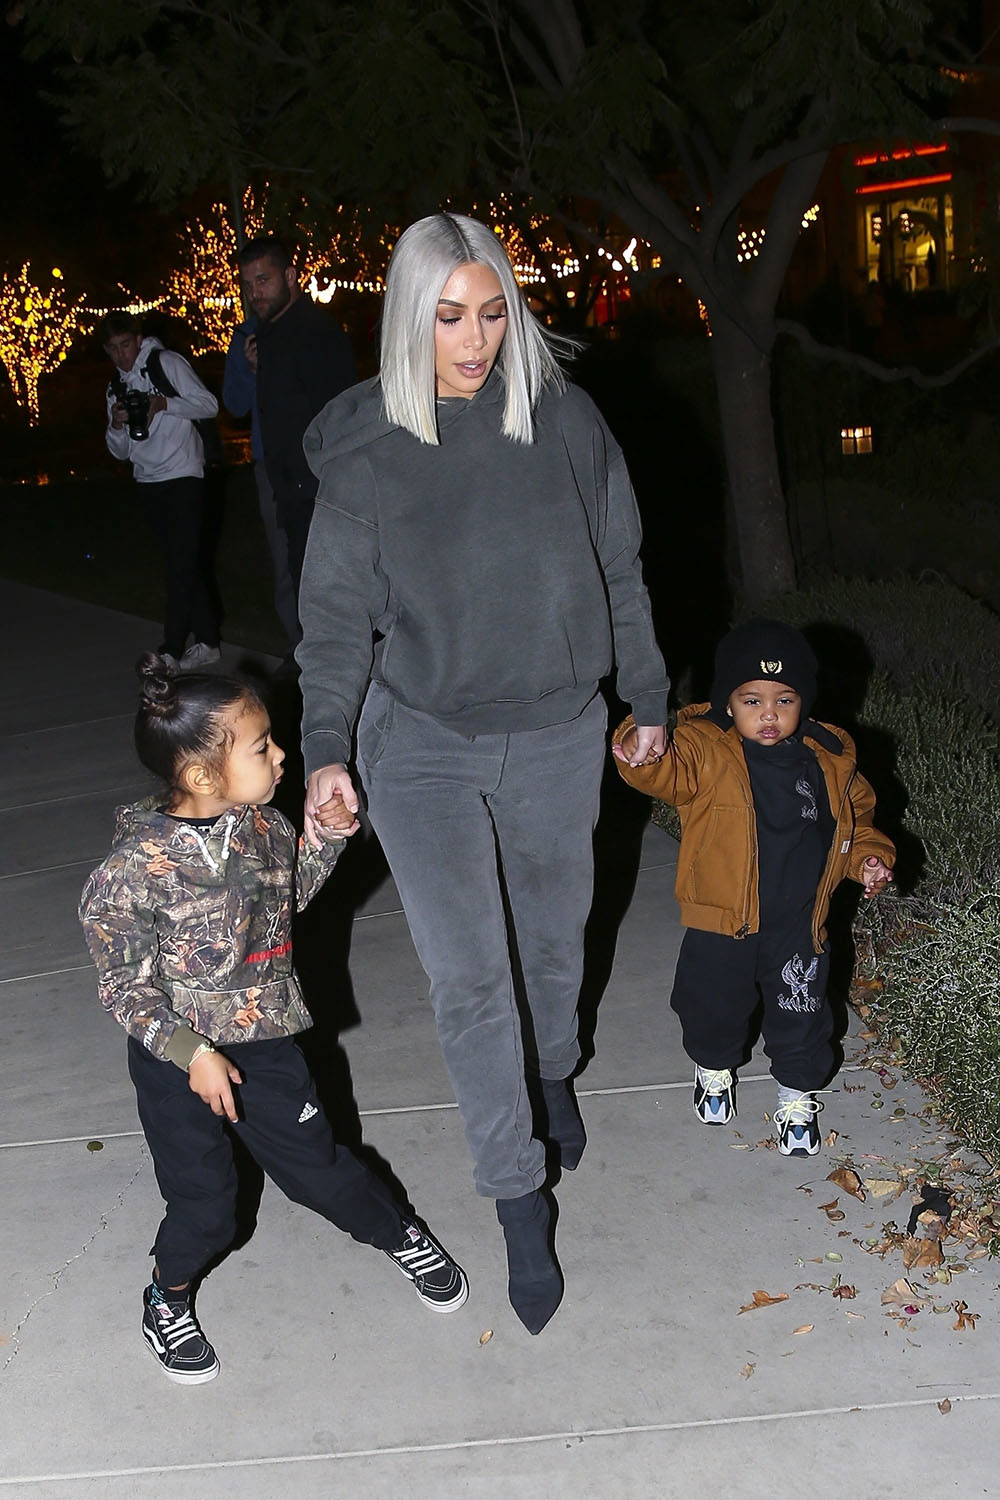 Kim Kardashian & Kourtney Kardashian take the kids ice skating